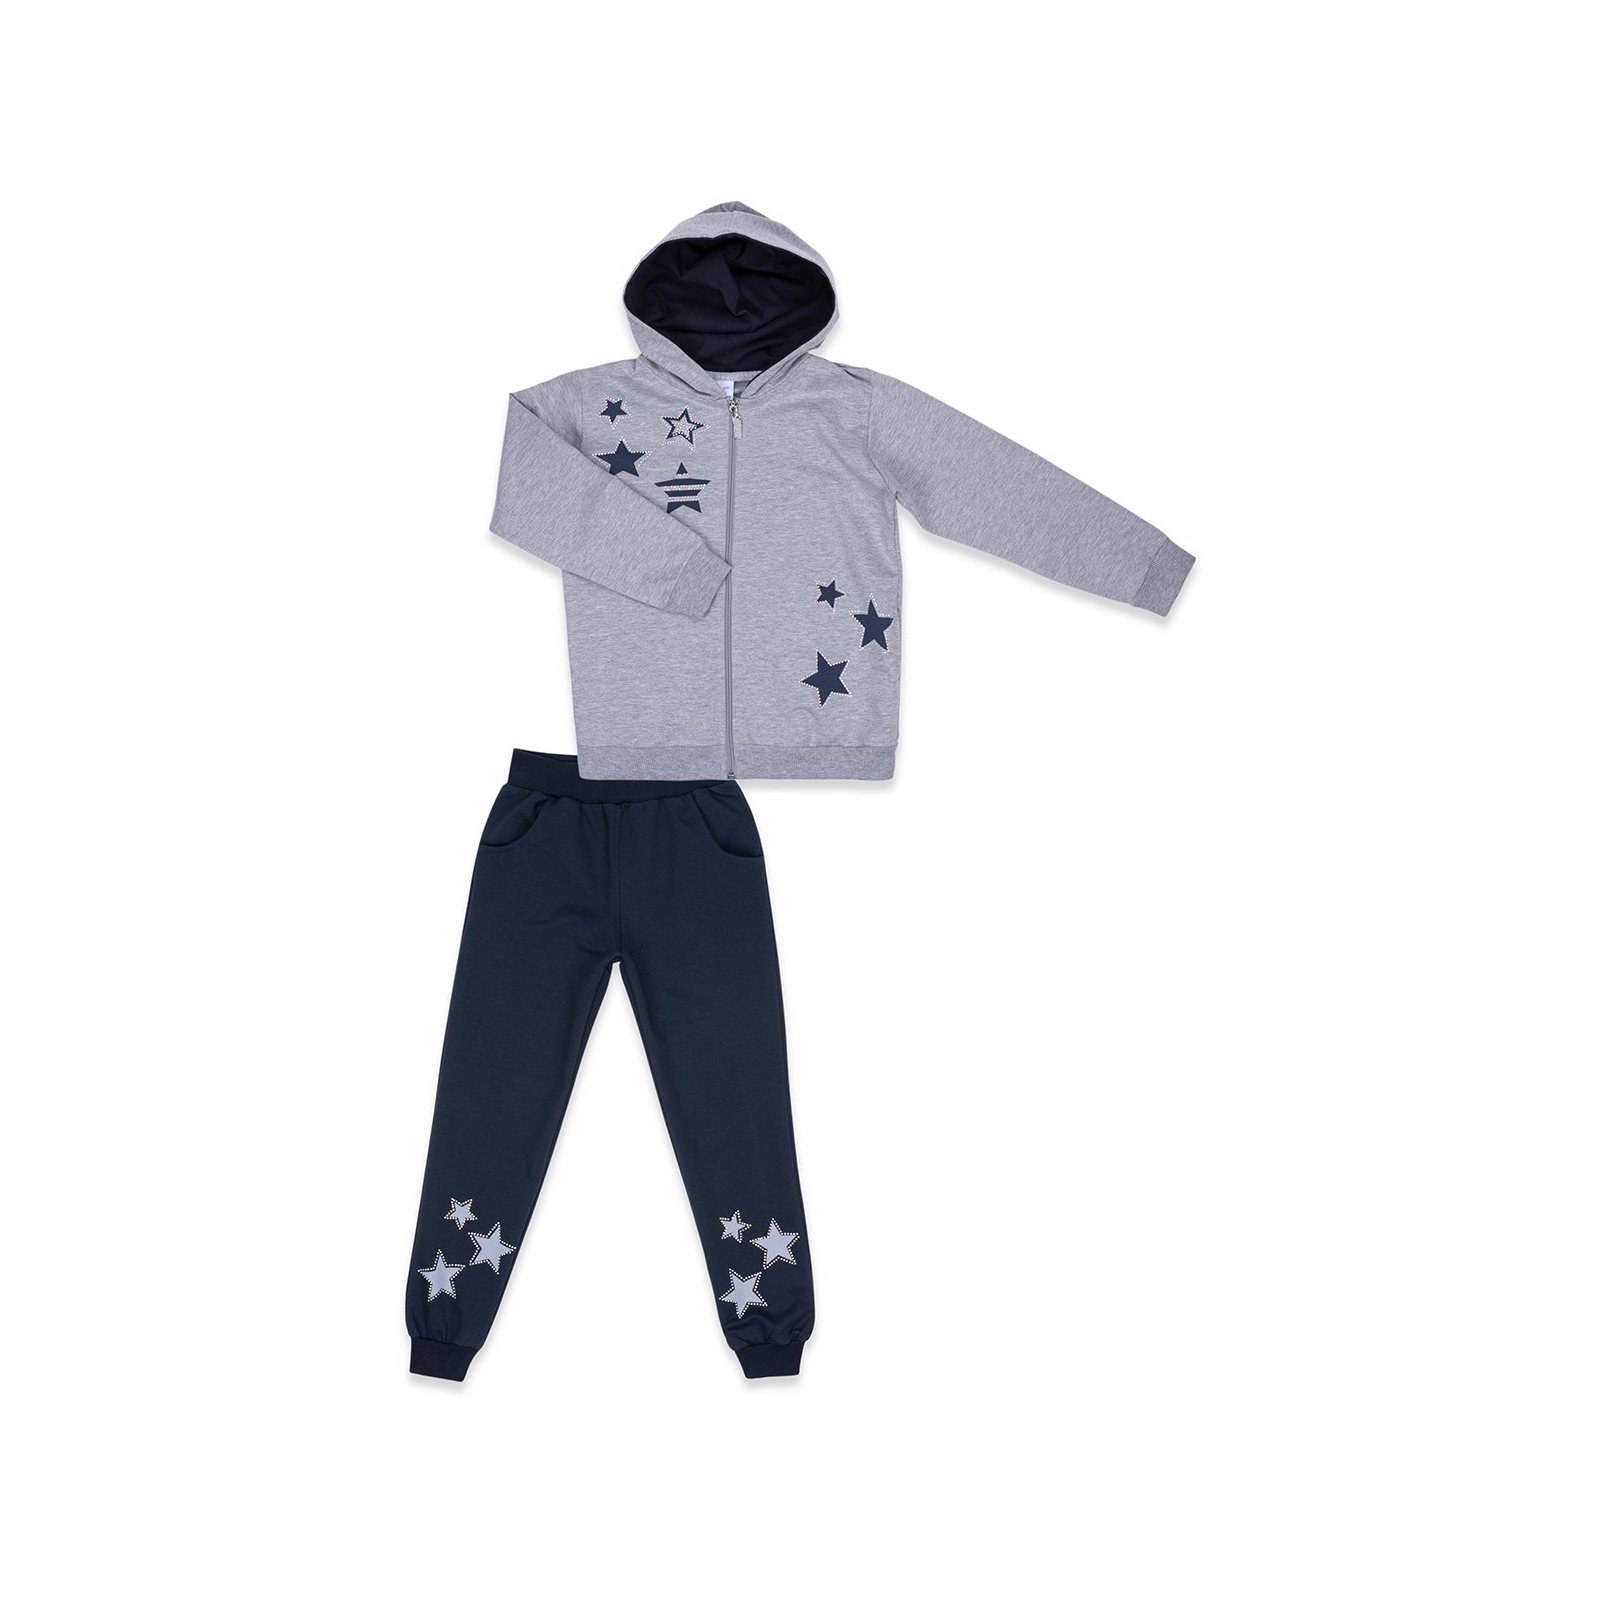 Спортивный костюм Breeze со звездами (9712-164G-gray)